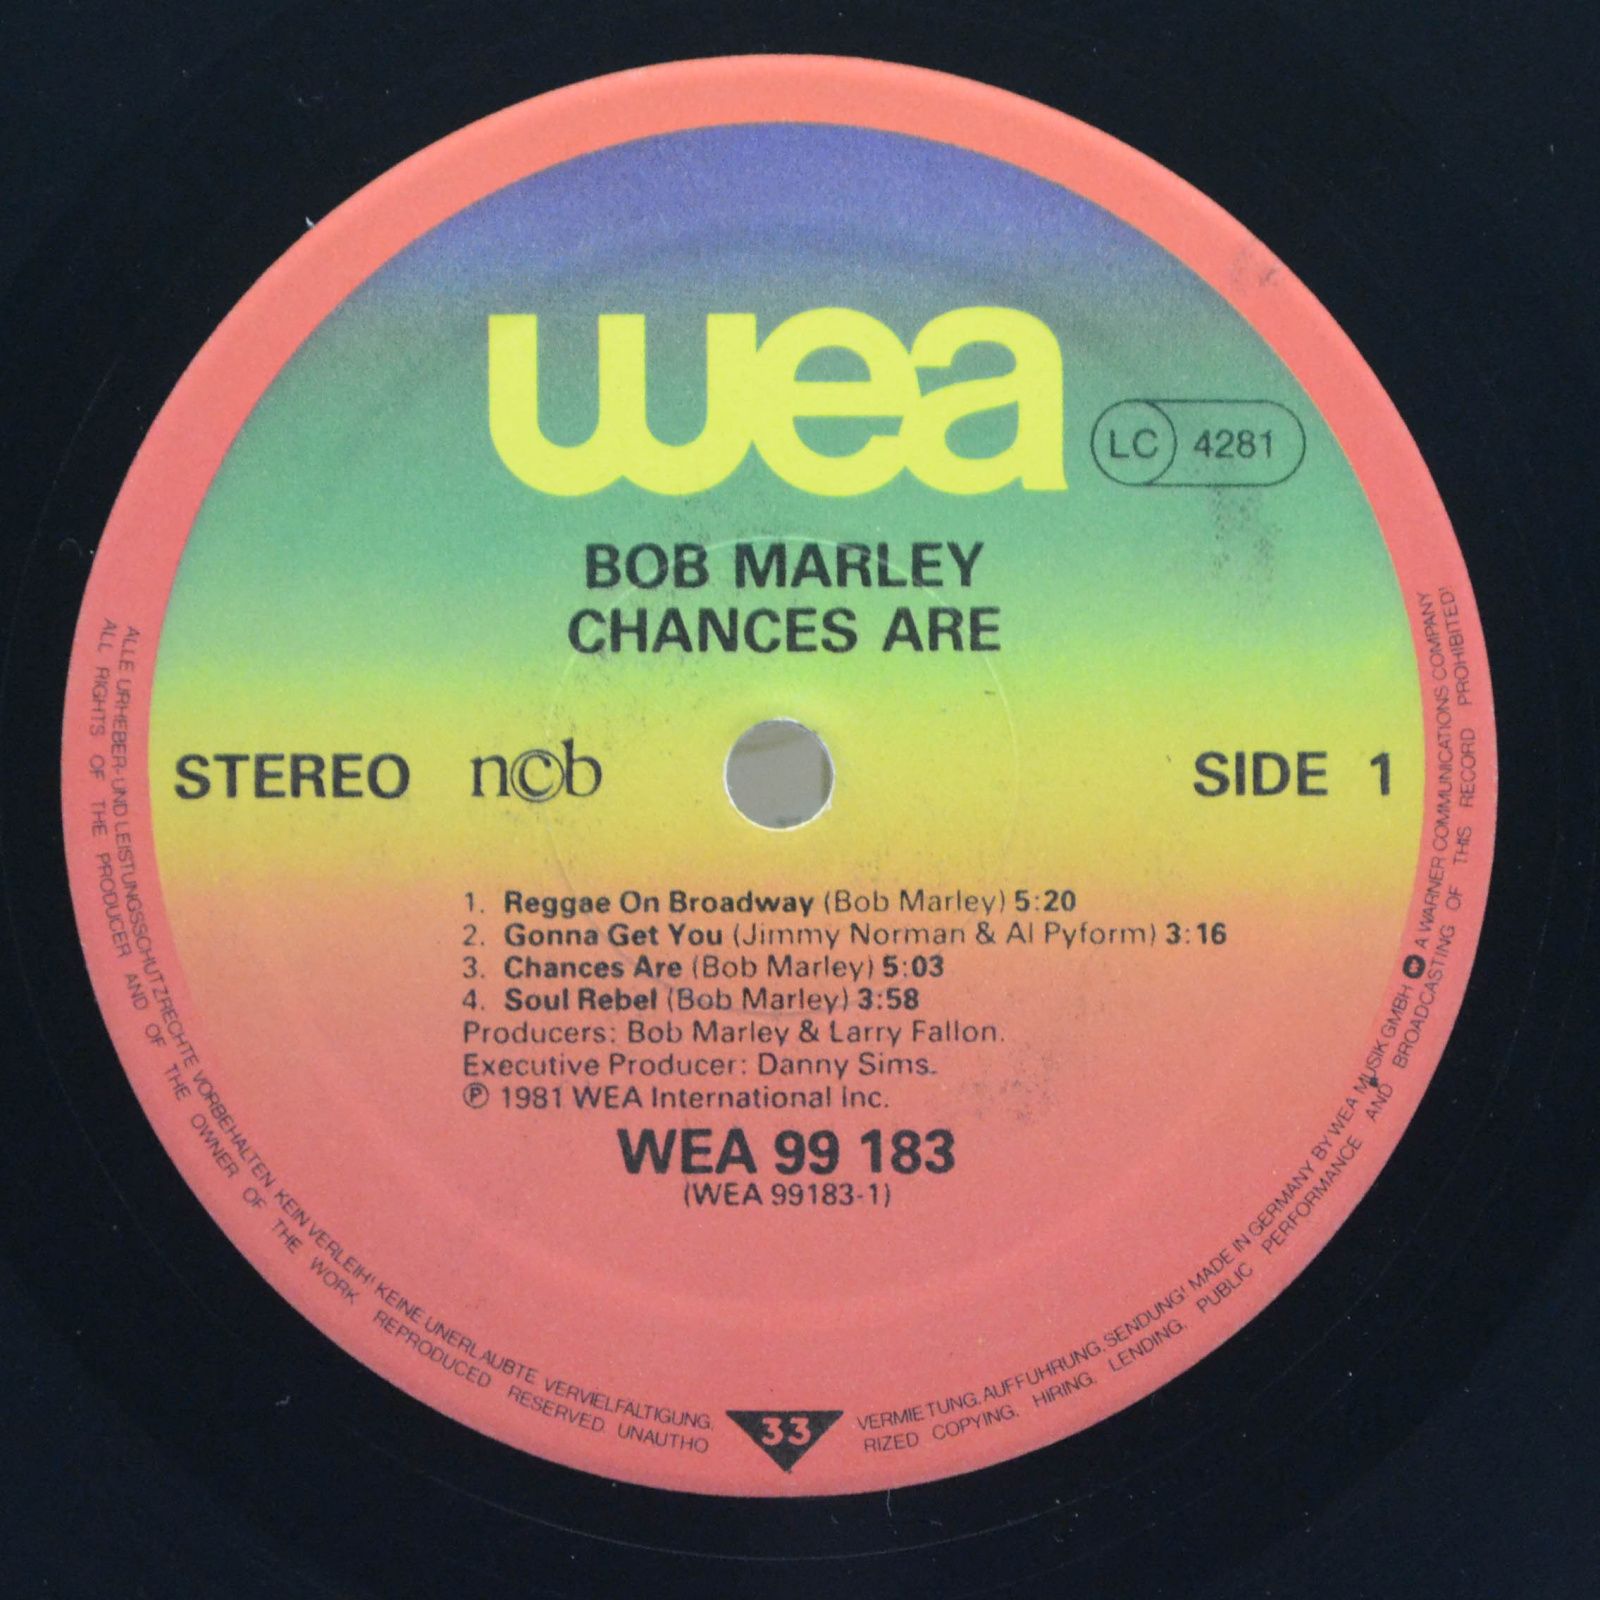 Bob Marley — Chances Are, 1981